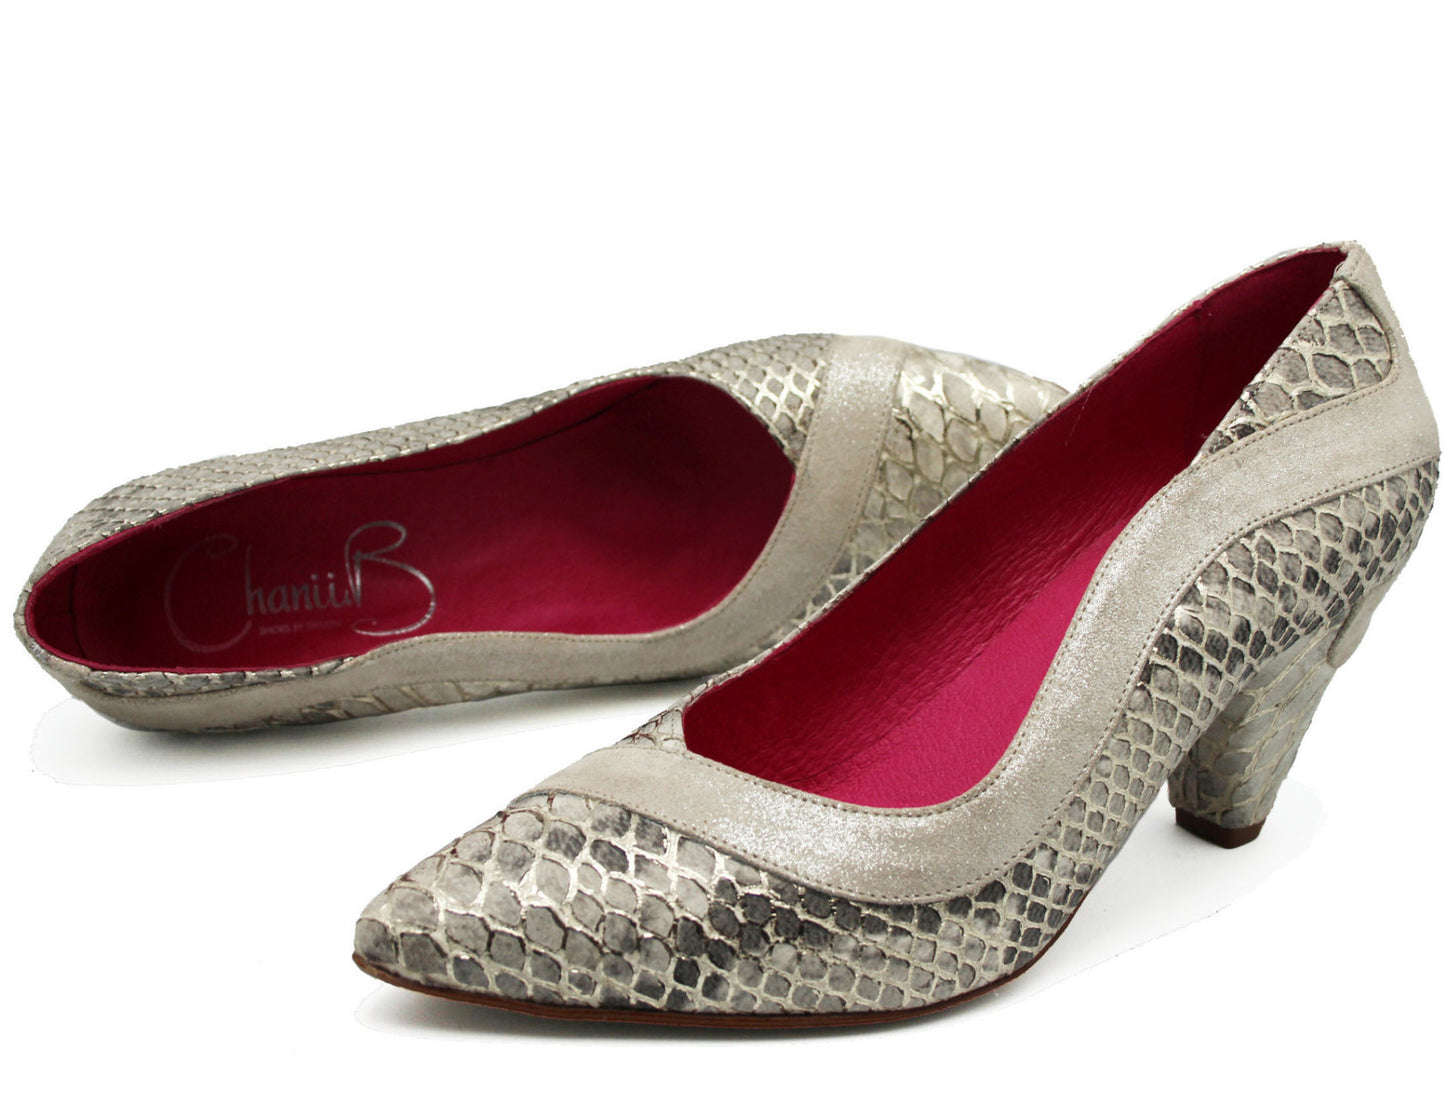 Salon - Gold/Cobra medium heel- LAST PARS 26, 37 AND 40!